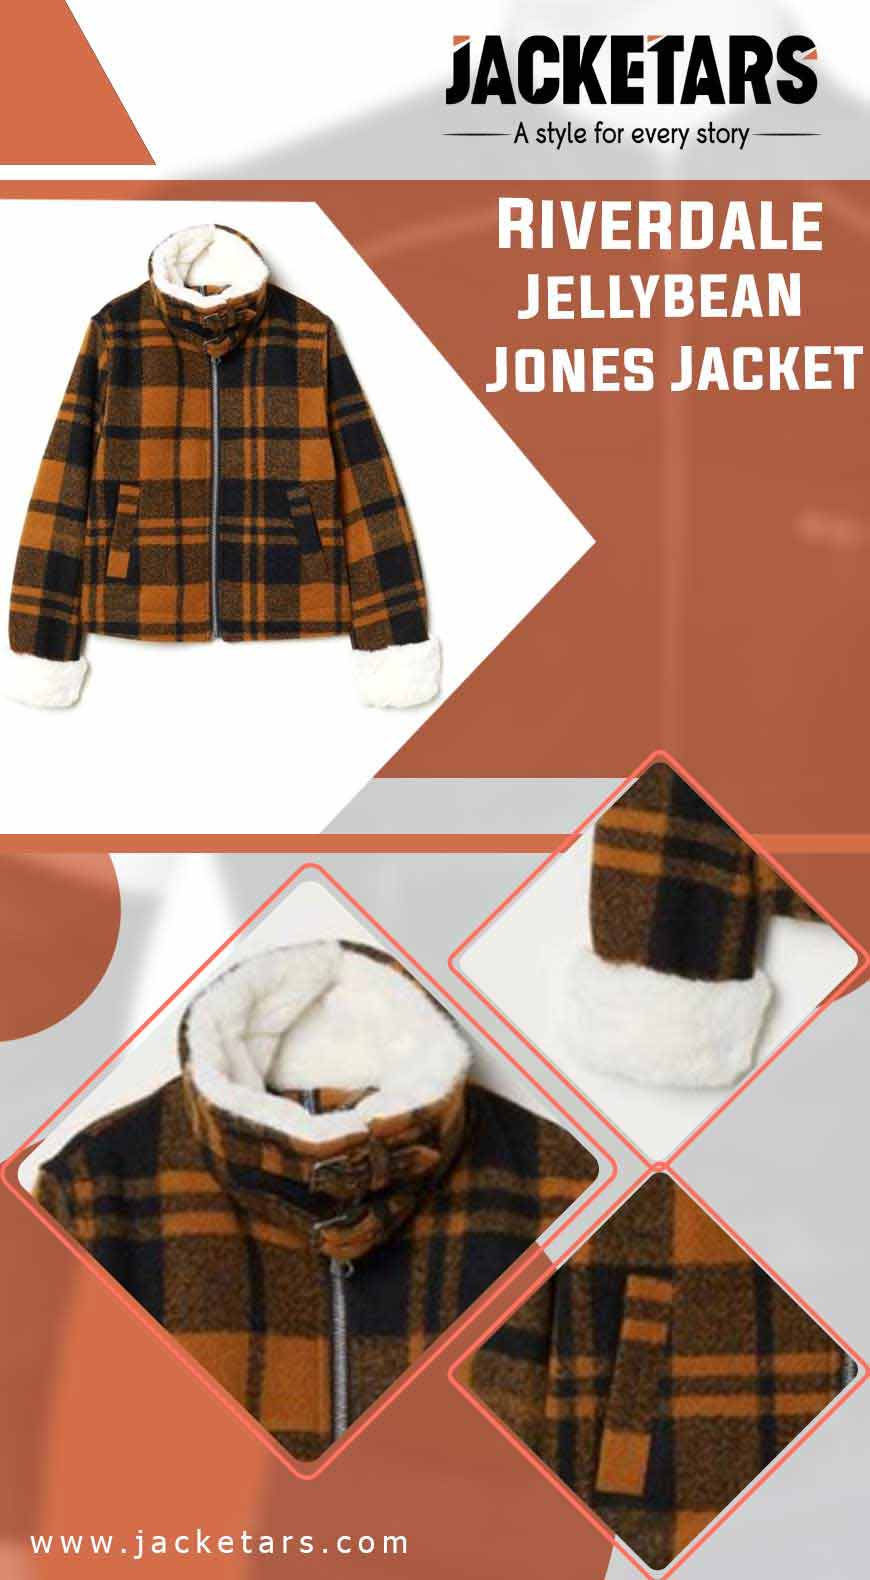 Riverdale Jellybean Jones Jacket info